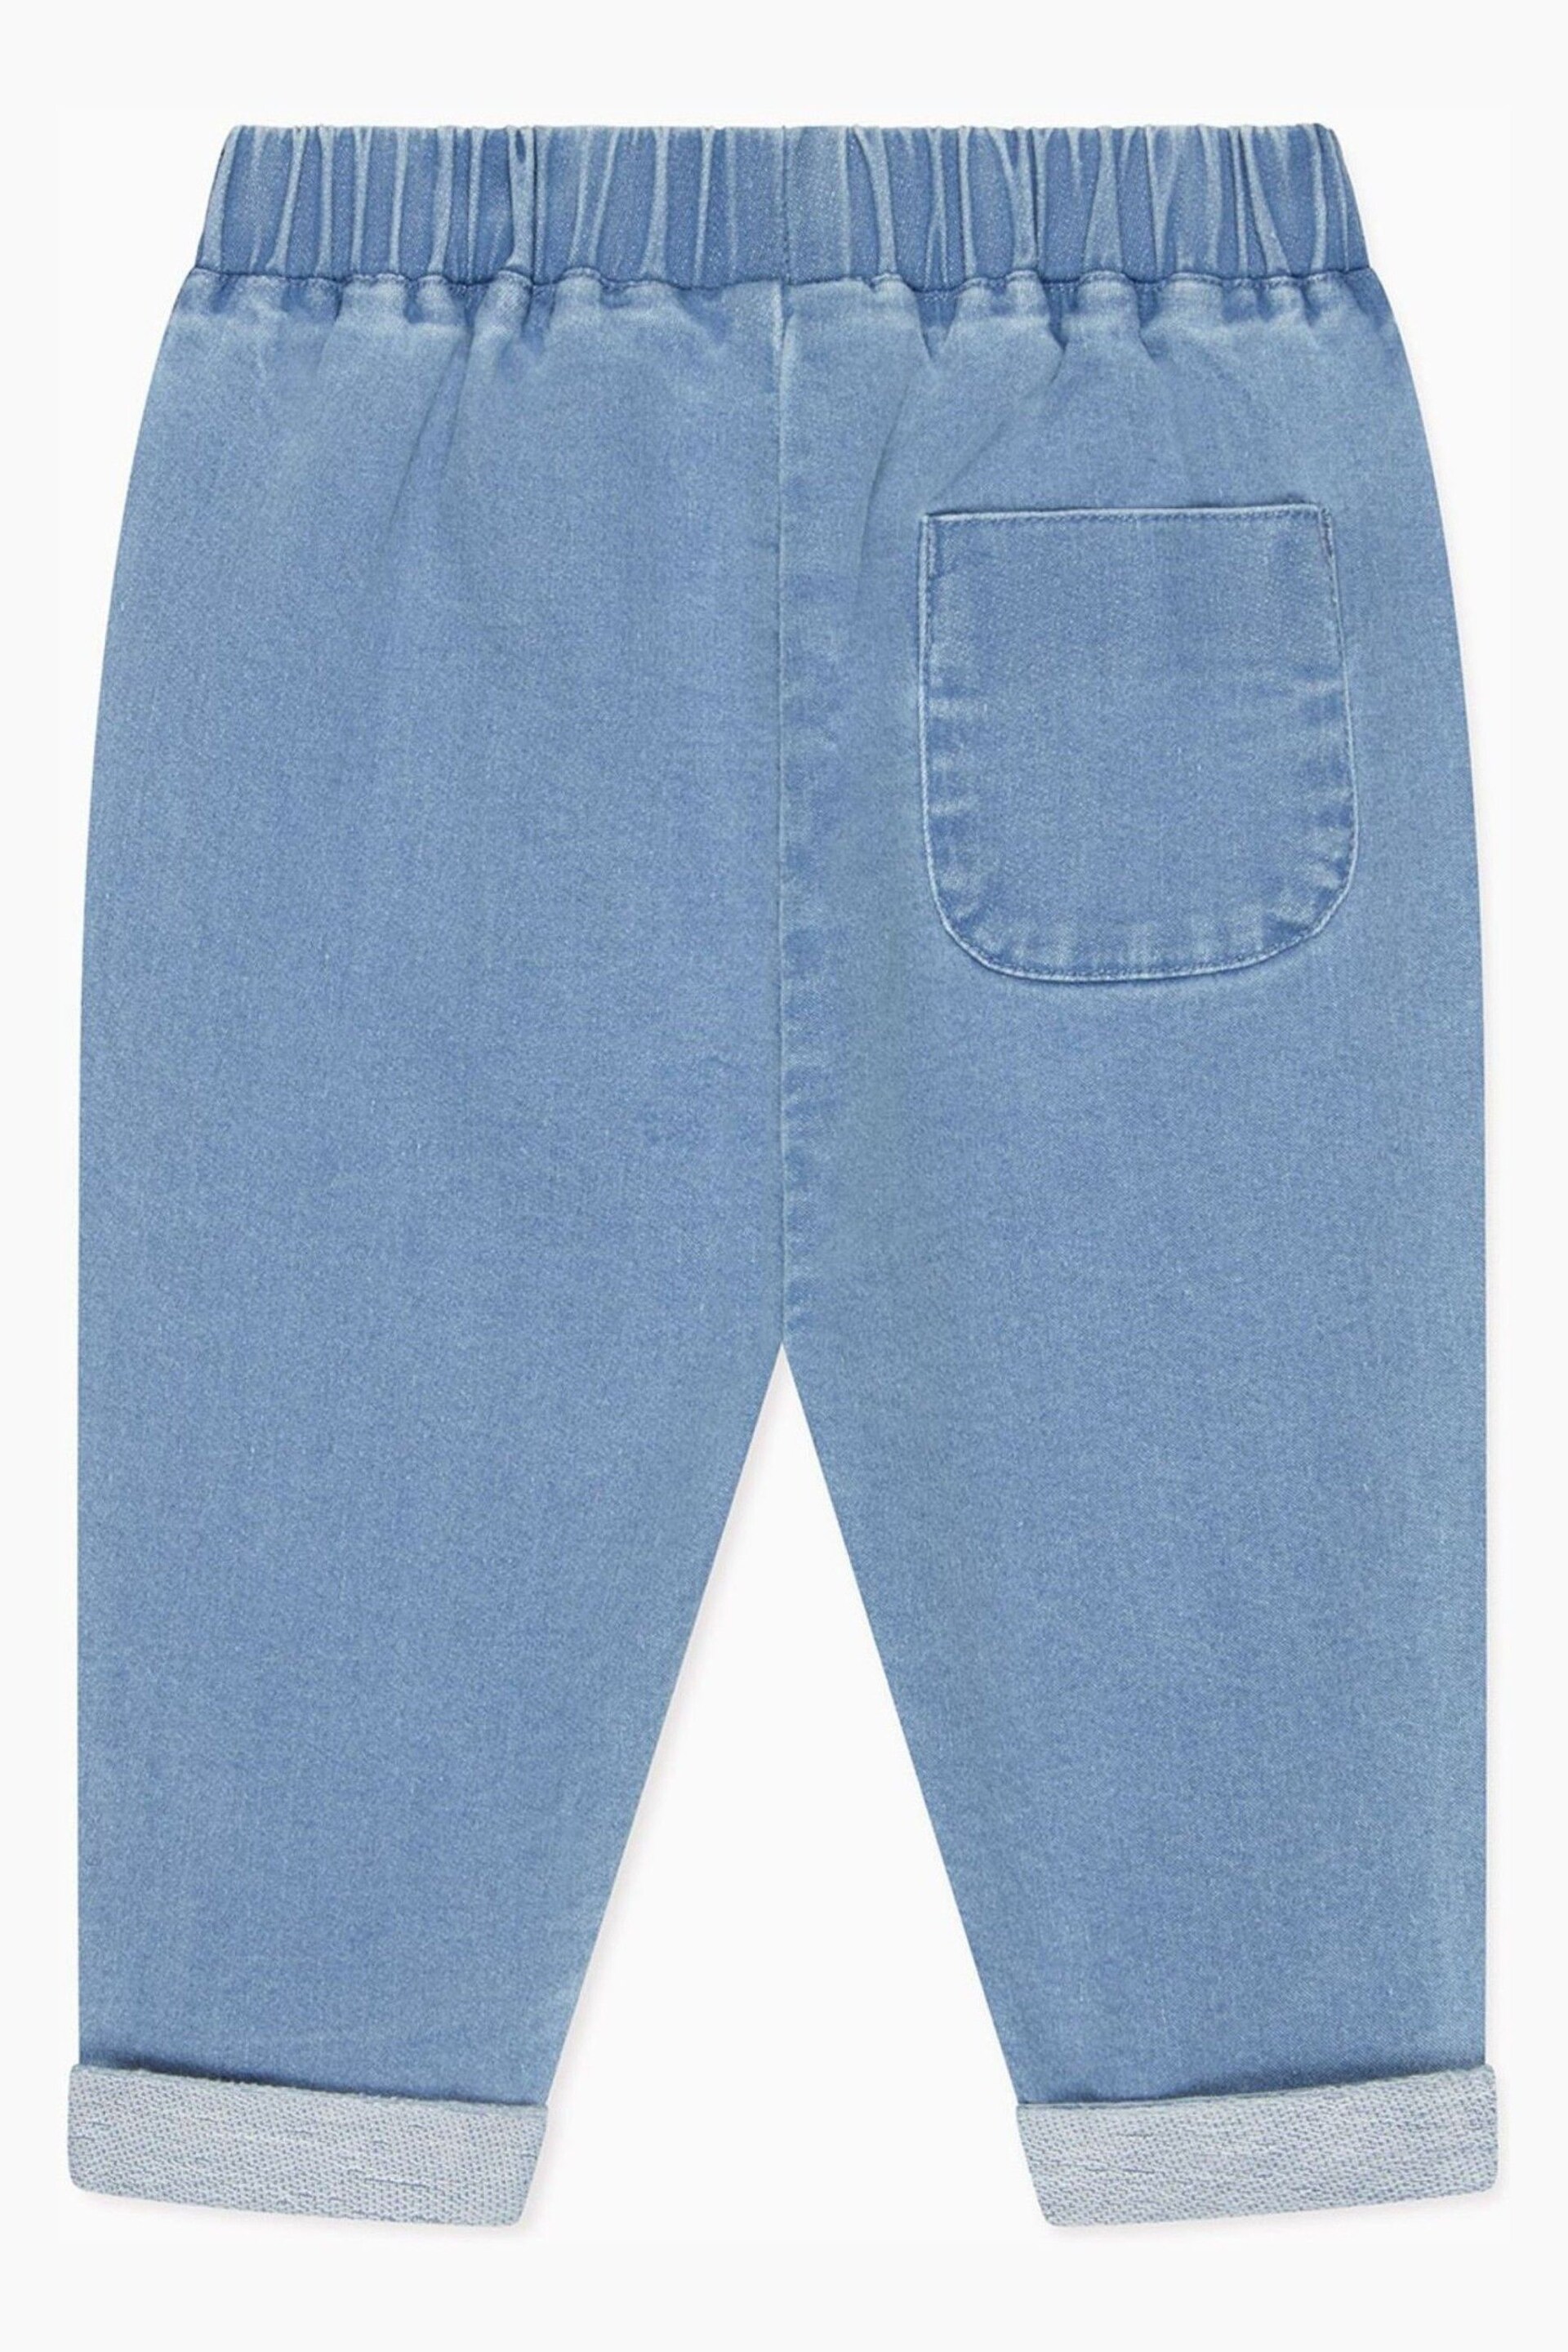 MORI Blue Organic Cotton Denim Chambray Soft Jeans - Image 4 of 4